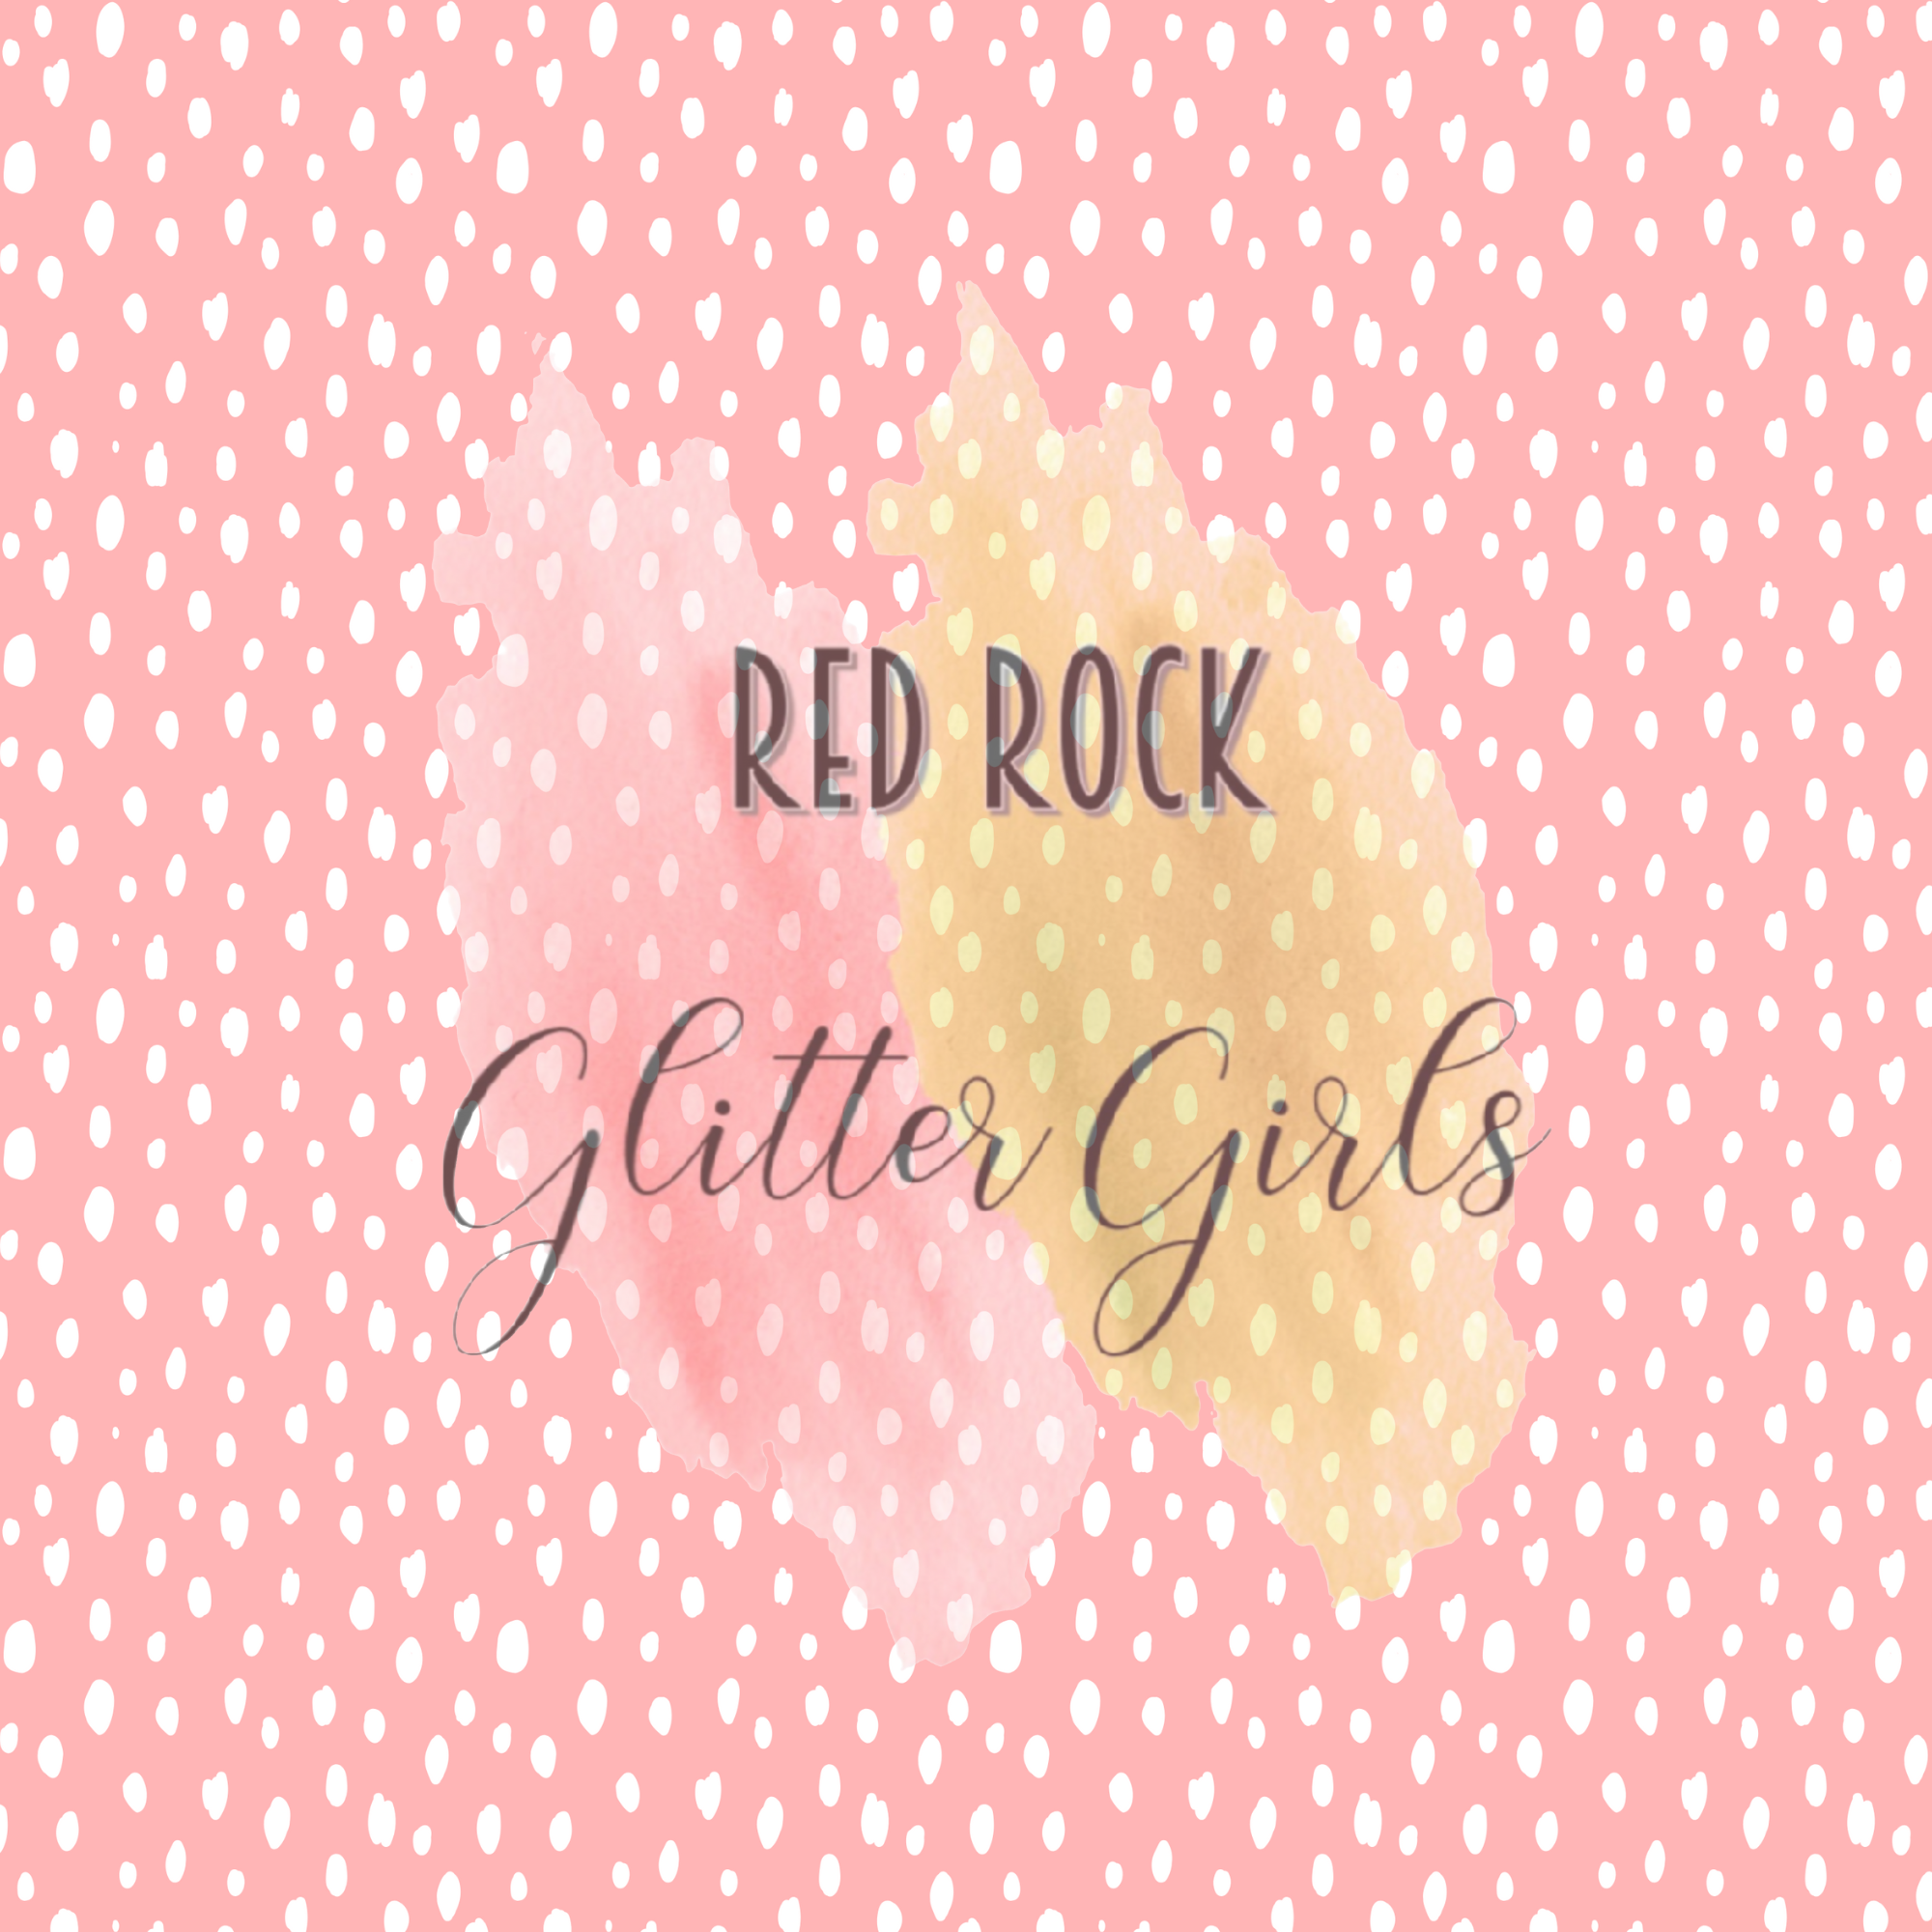 Red Rock Glitter Girls